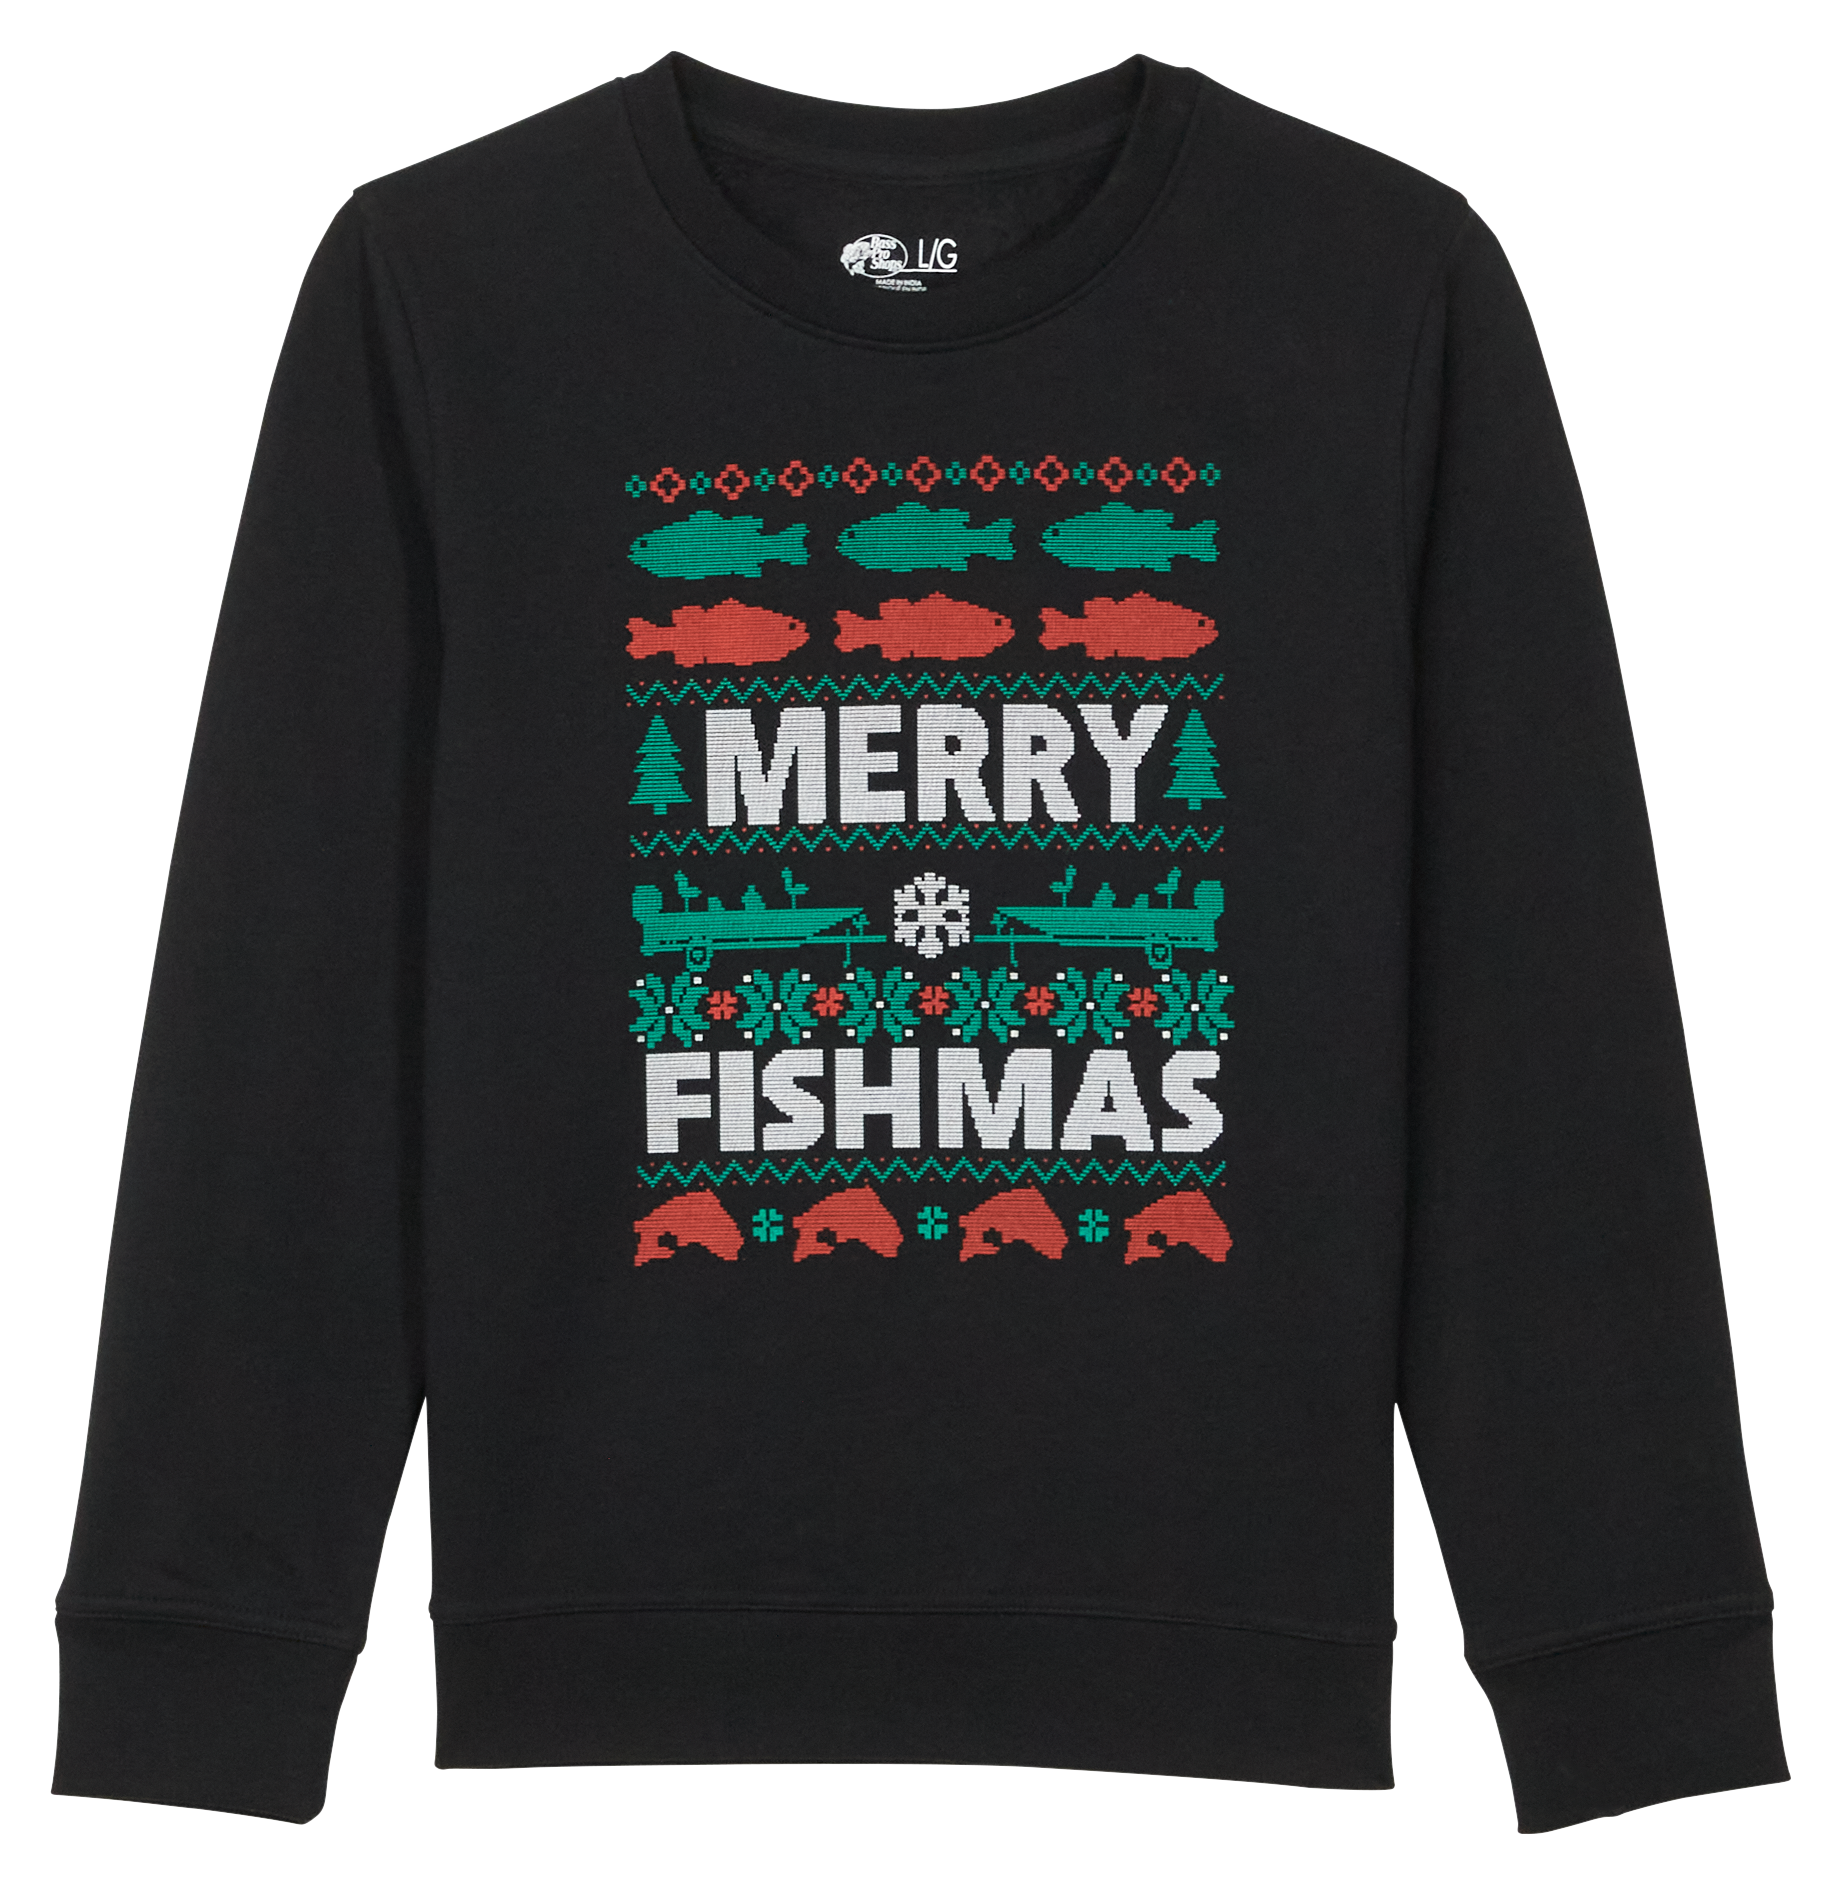 Bass Pro Shops Merry Fishmas Christmas Sweatshirt for Kids - Black - S